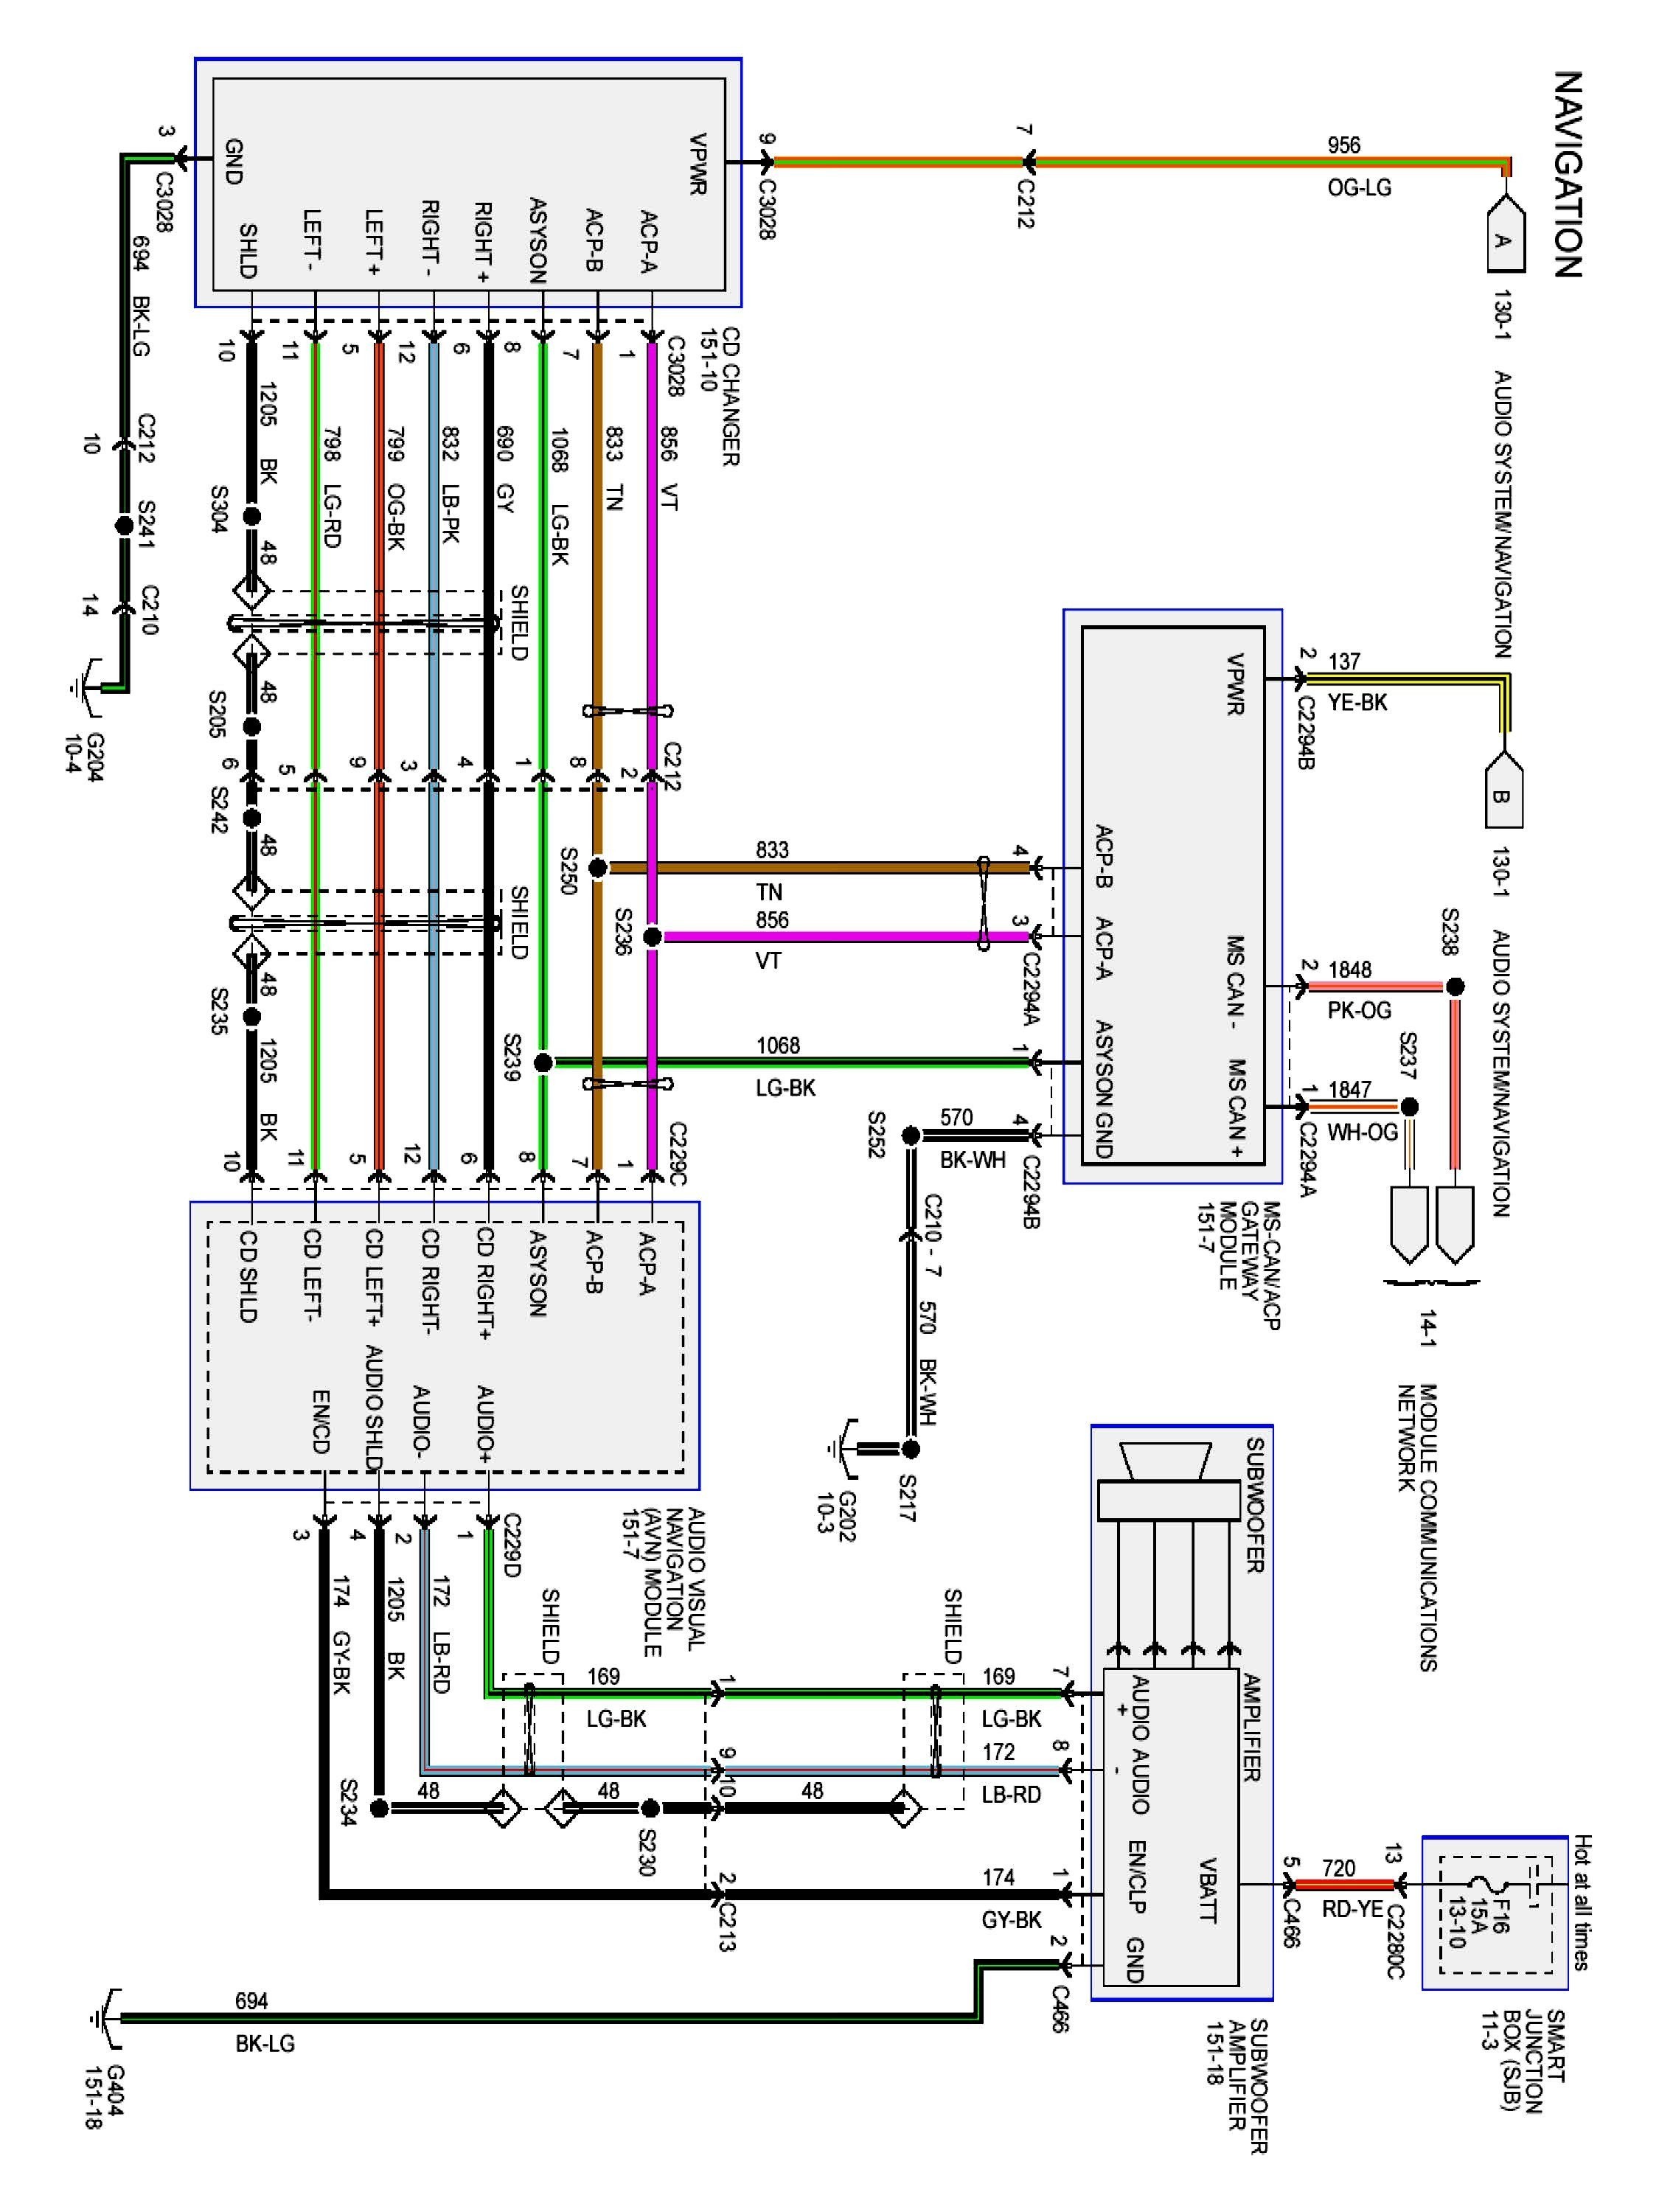 99 ford Escort Engine Diagram Ac Wiring Diagram 2000 E250 Wiring Diagram Datasource Of 99 ford Escort Engine Diagram